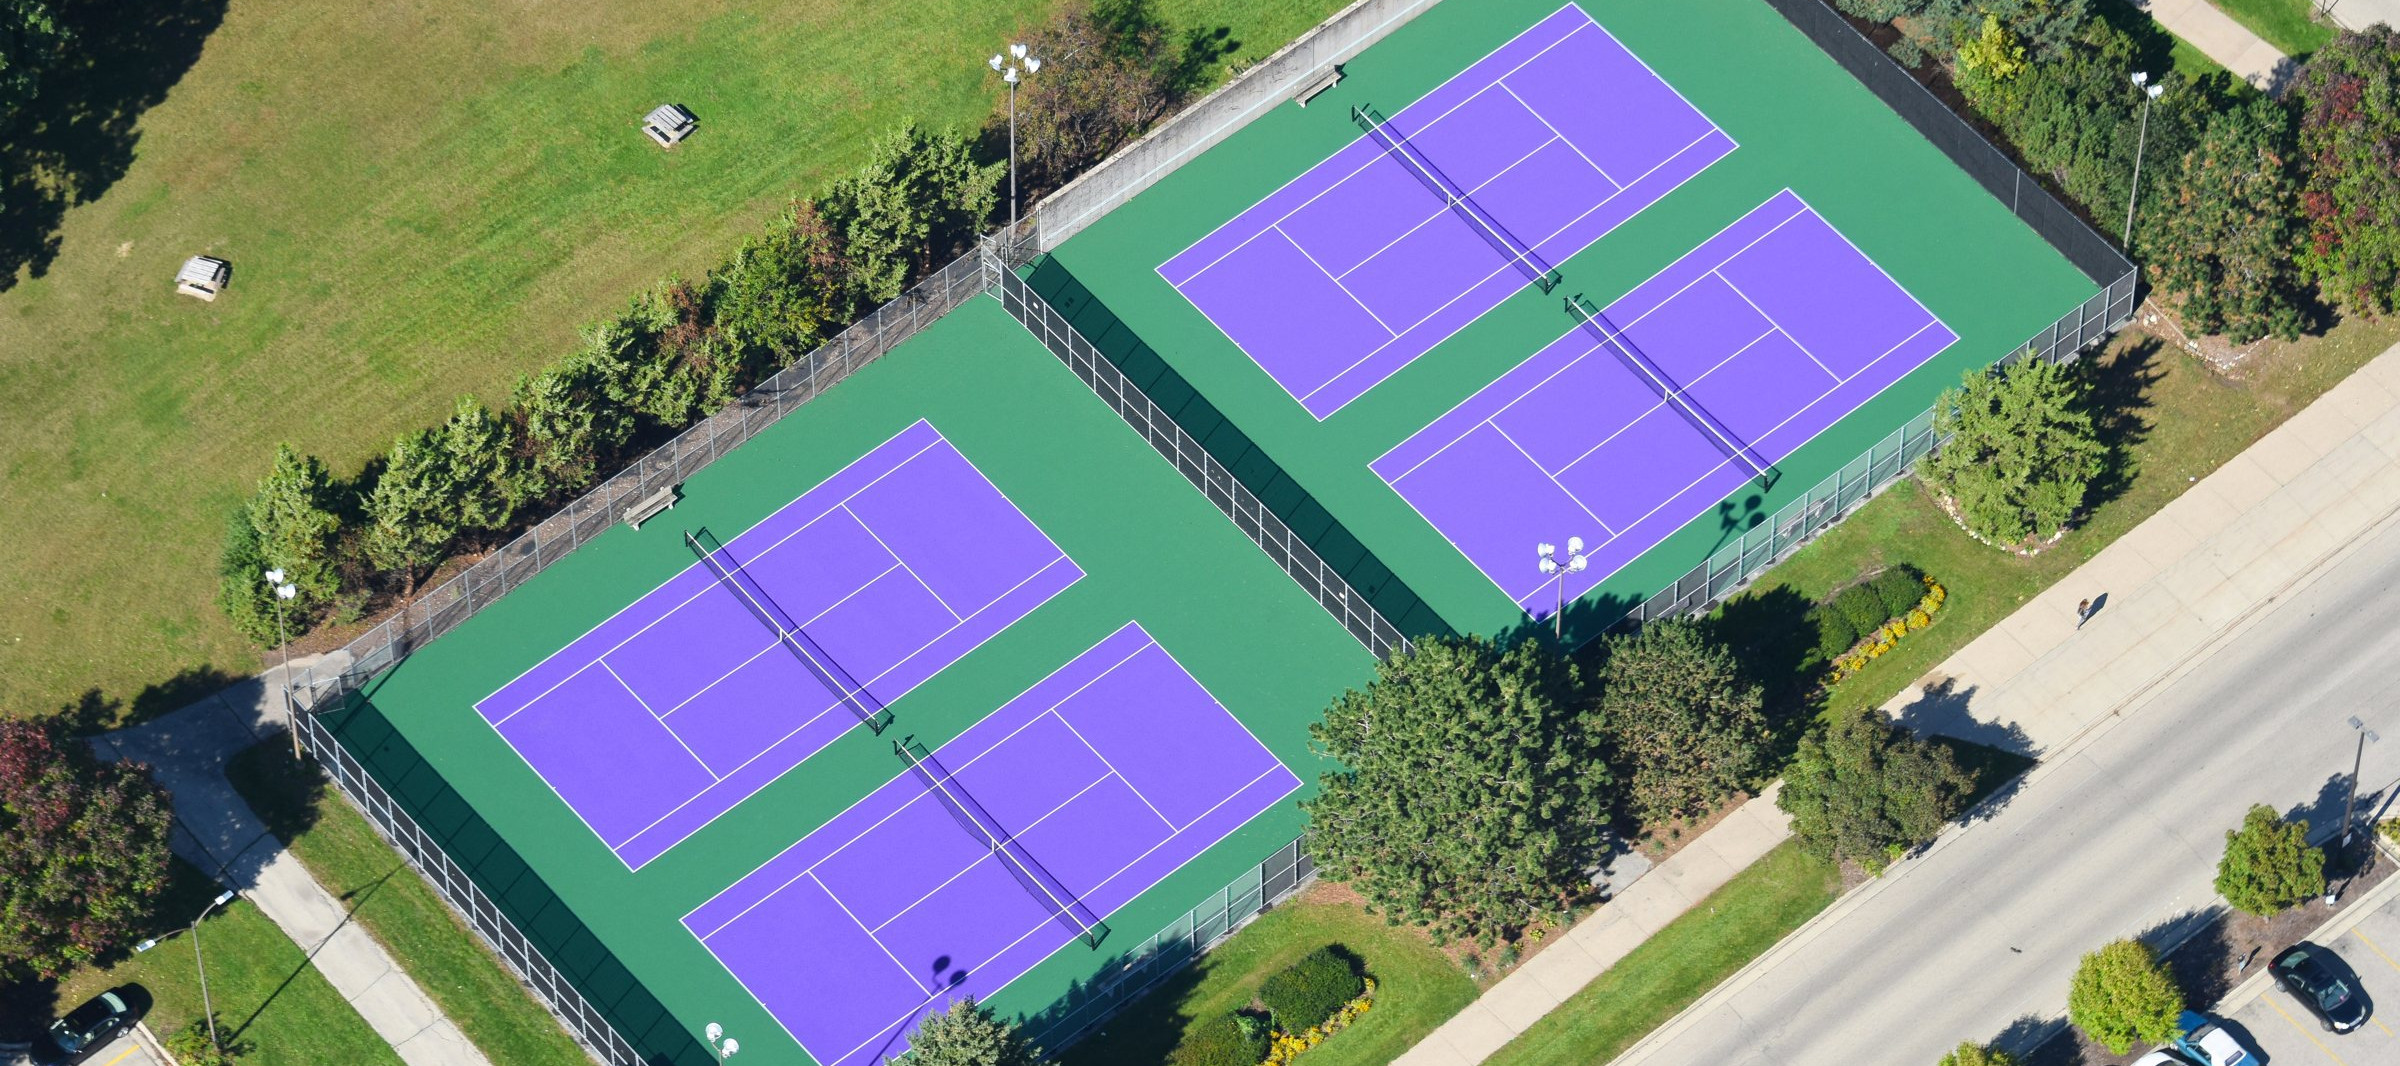 Schicksal Sensor Prozentsatz tennis court flooring Idee Einfachheit